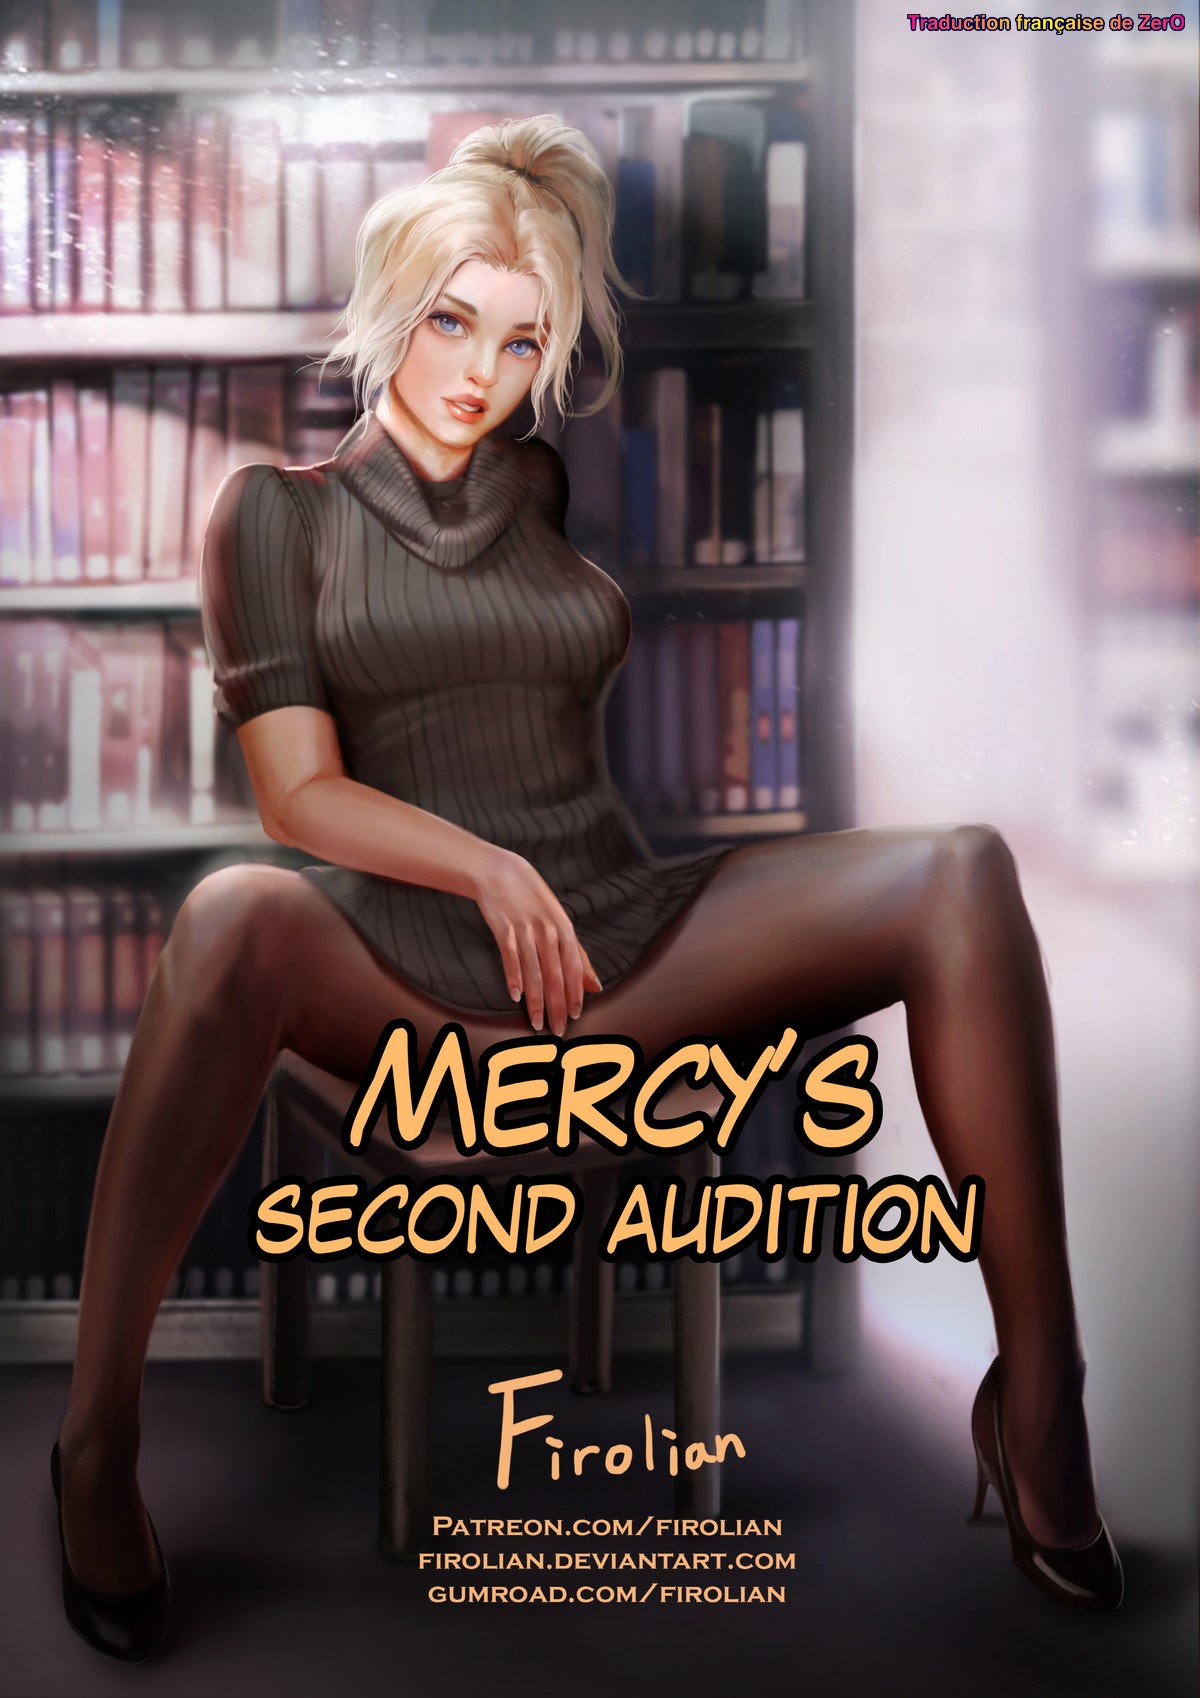 Mercys second audition